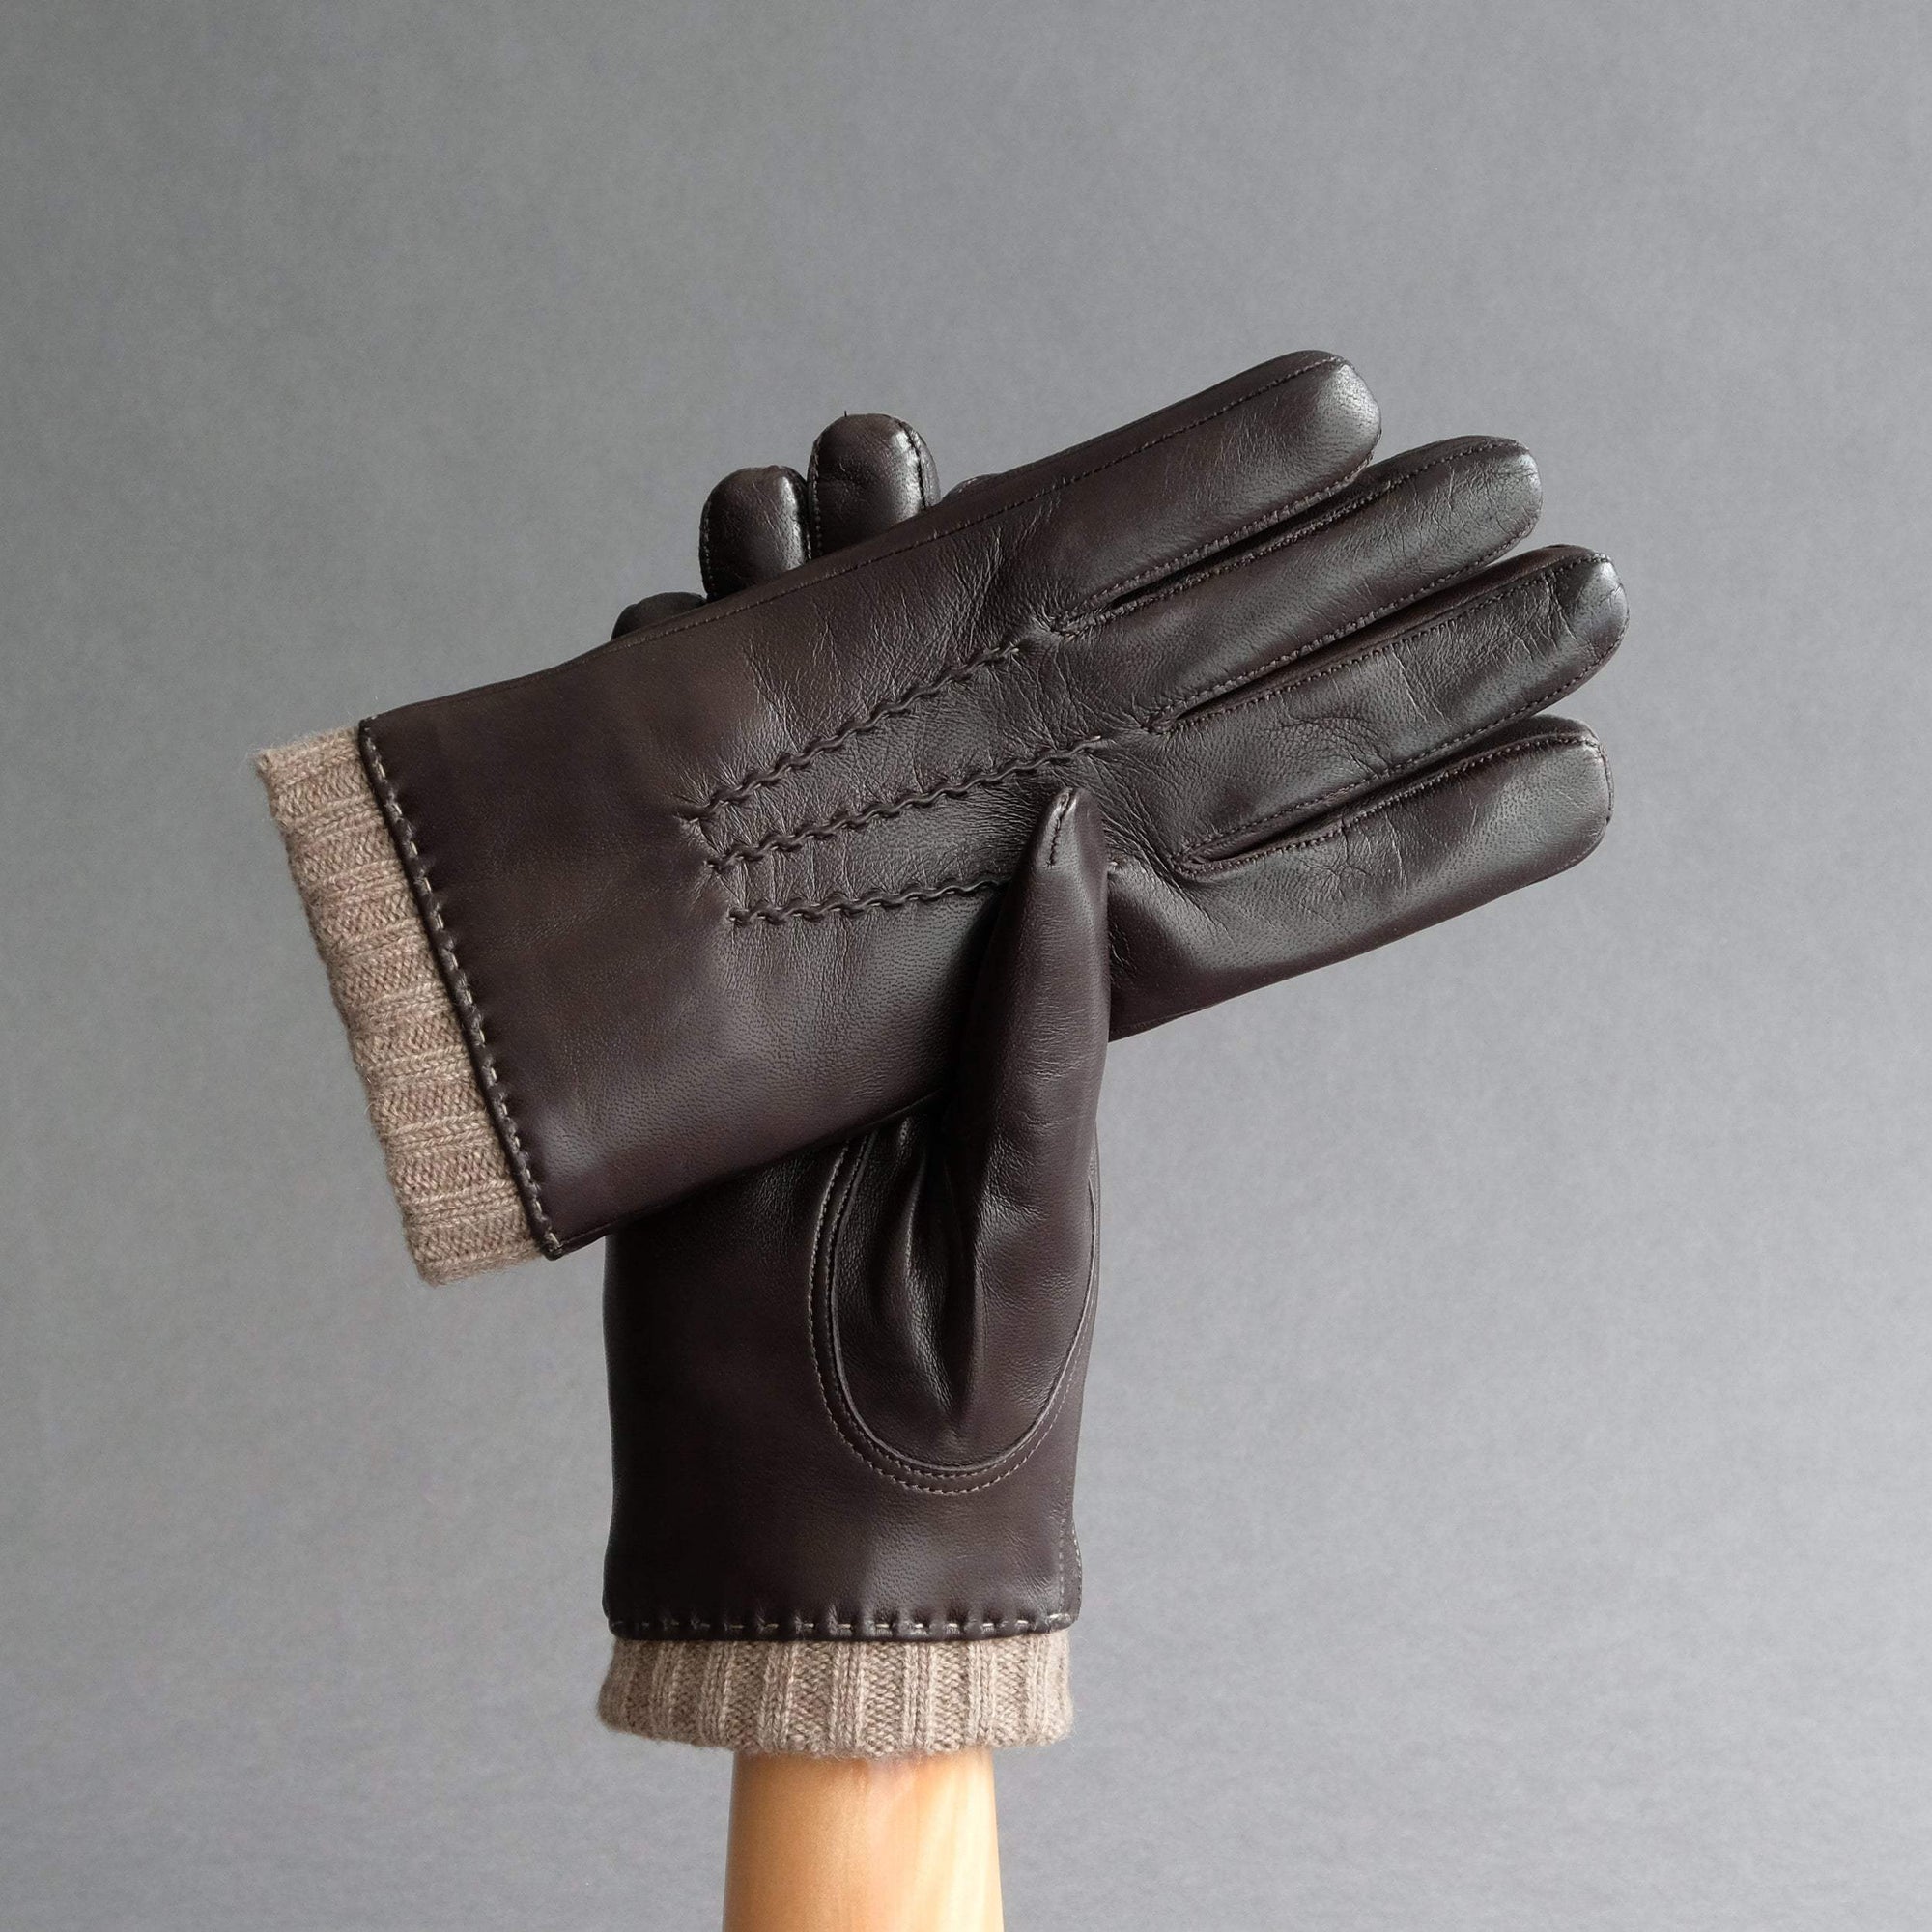 Gentlemen's Gloves from Dark Brown Hair Sheep Nappa Lined With Cashmere - TR Handschuhe Wien - Thomas Riemer Handmade Gloves